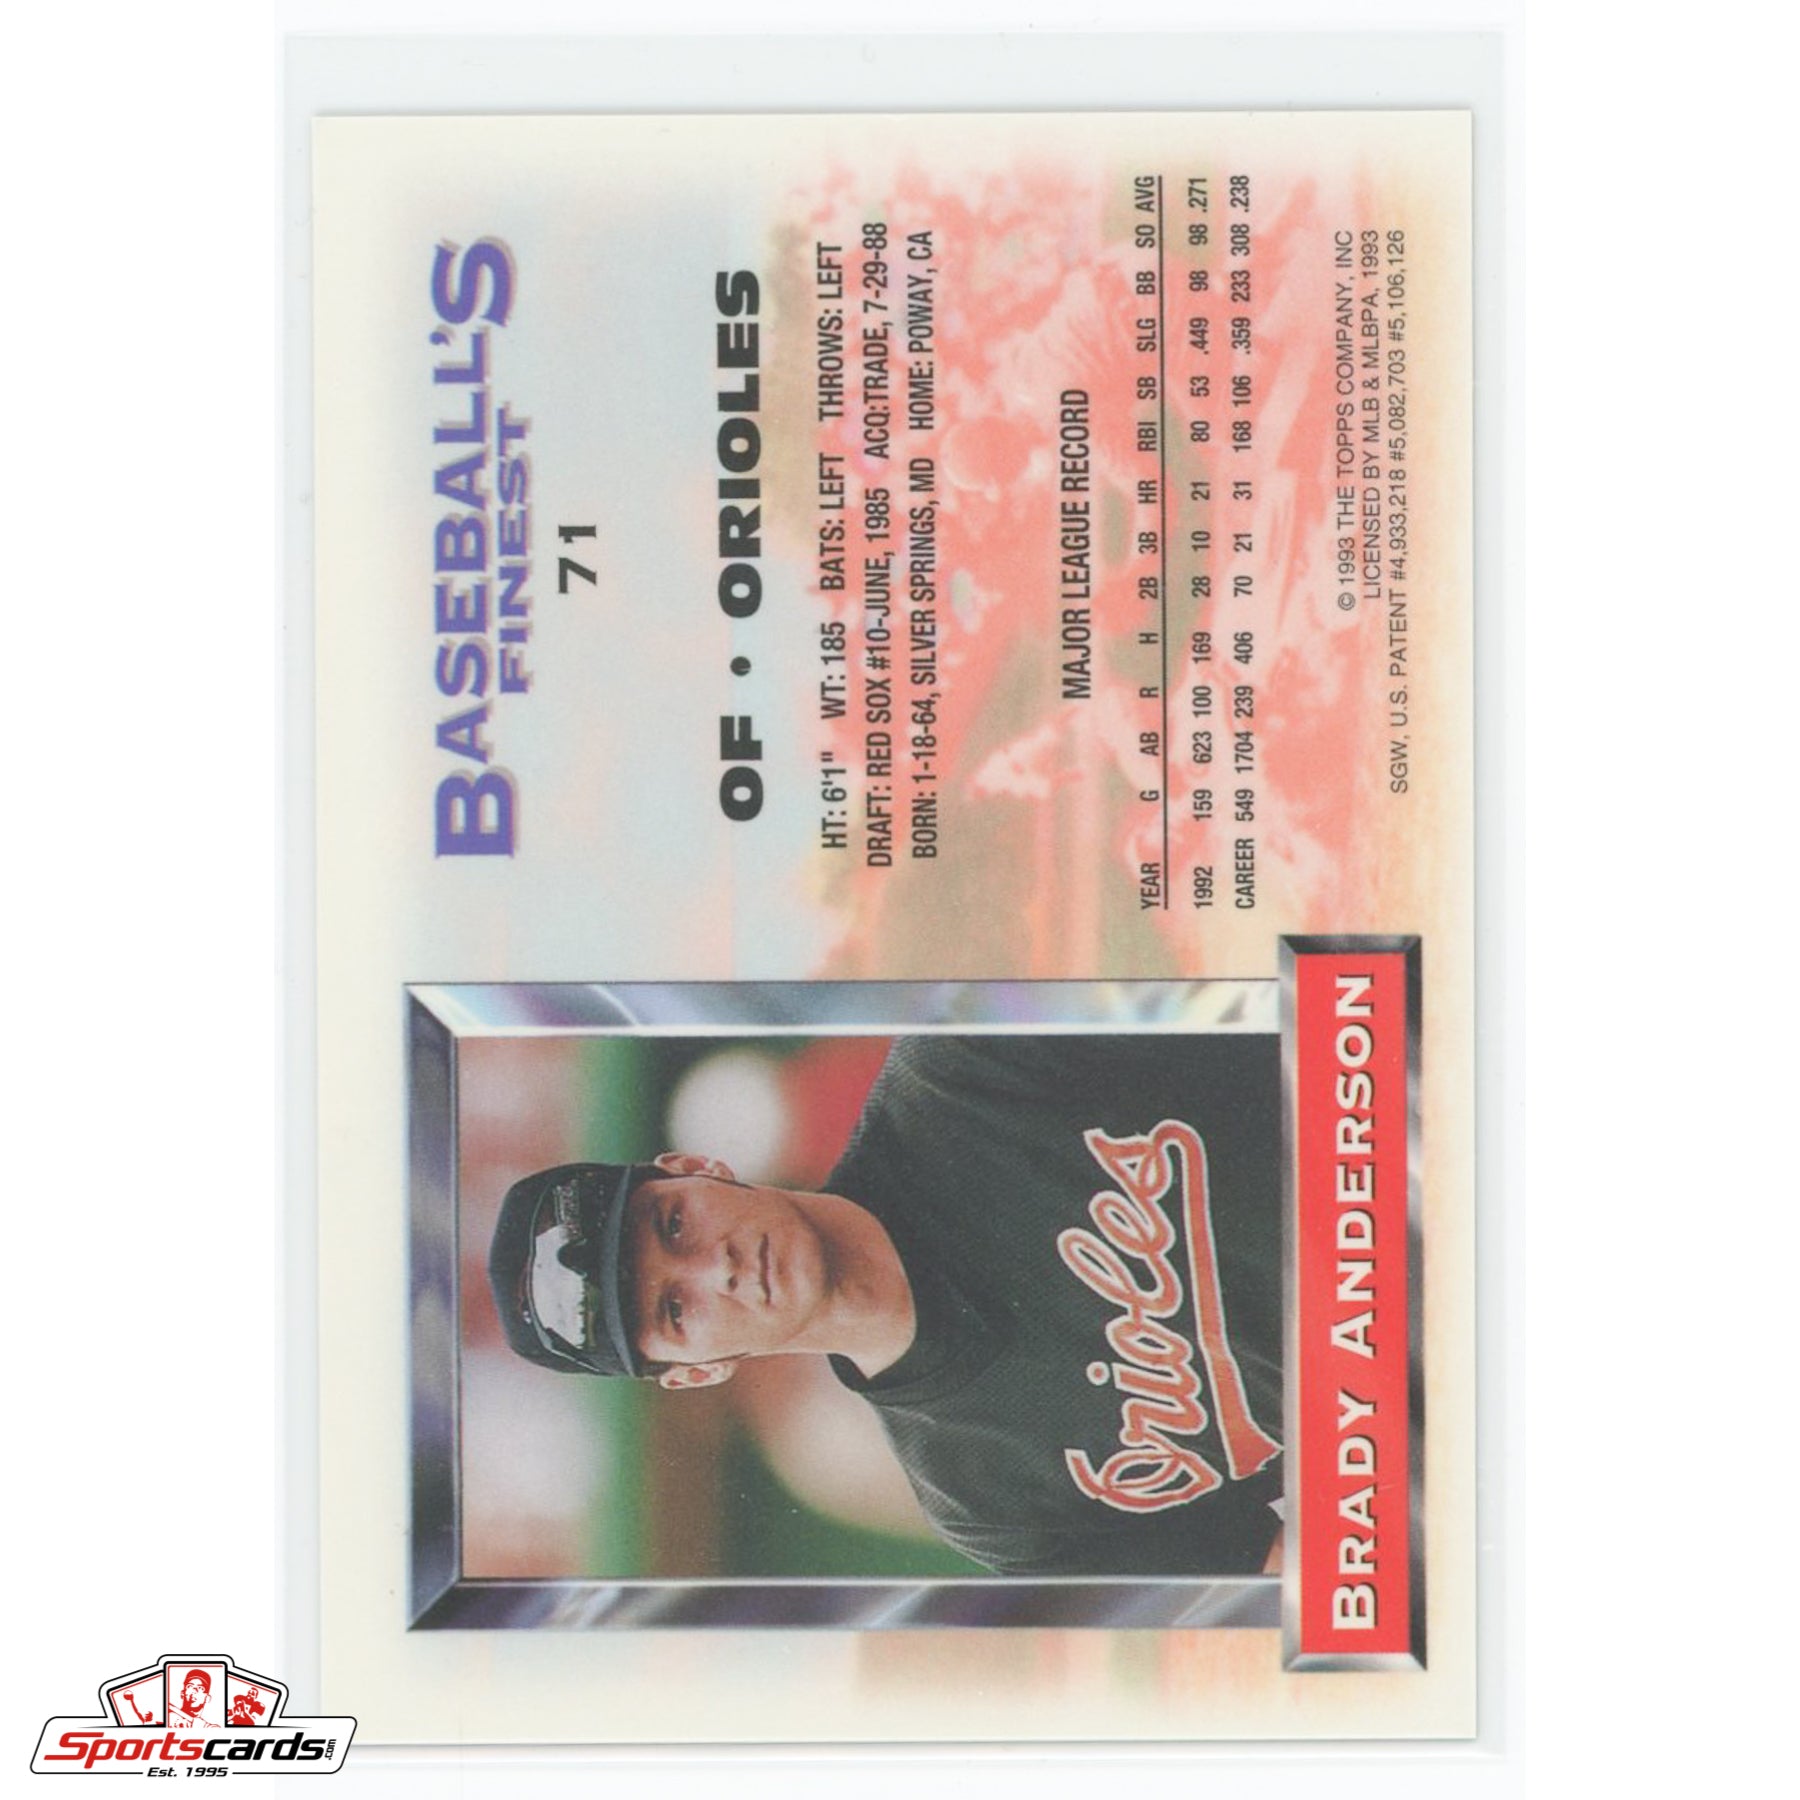 1993 Finest Brady Anderson Refractor #71 Baltimore Orioles